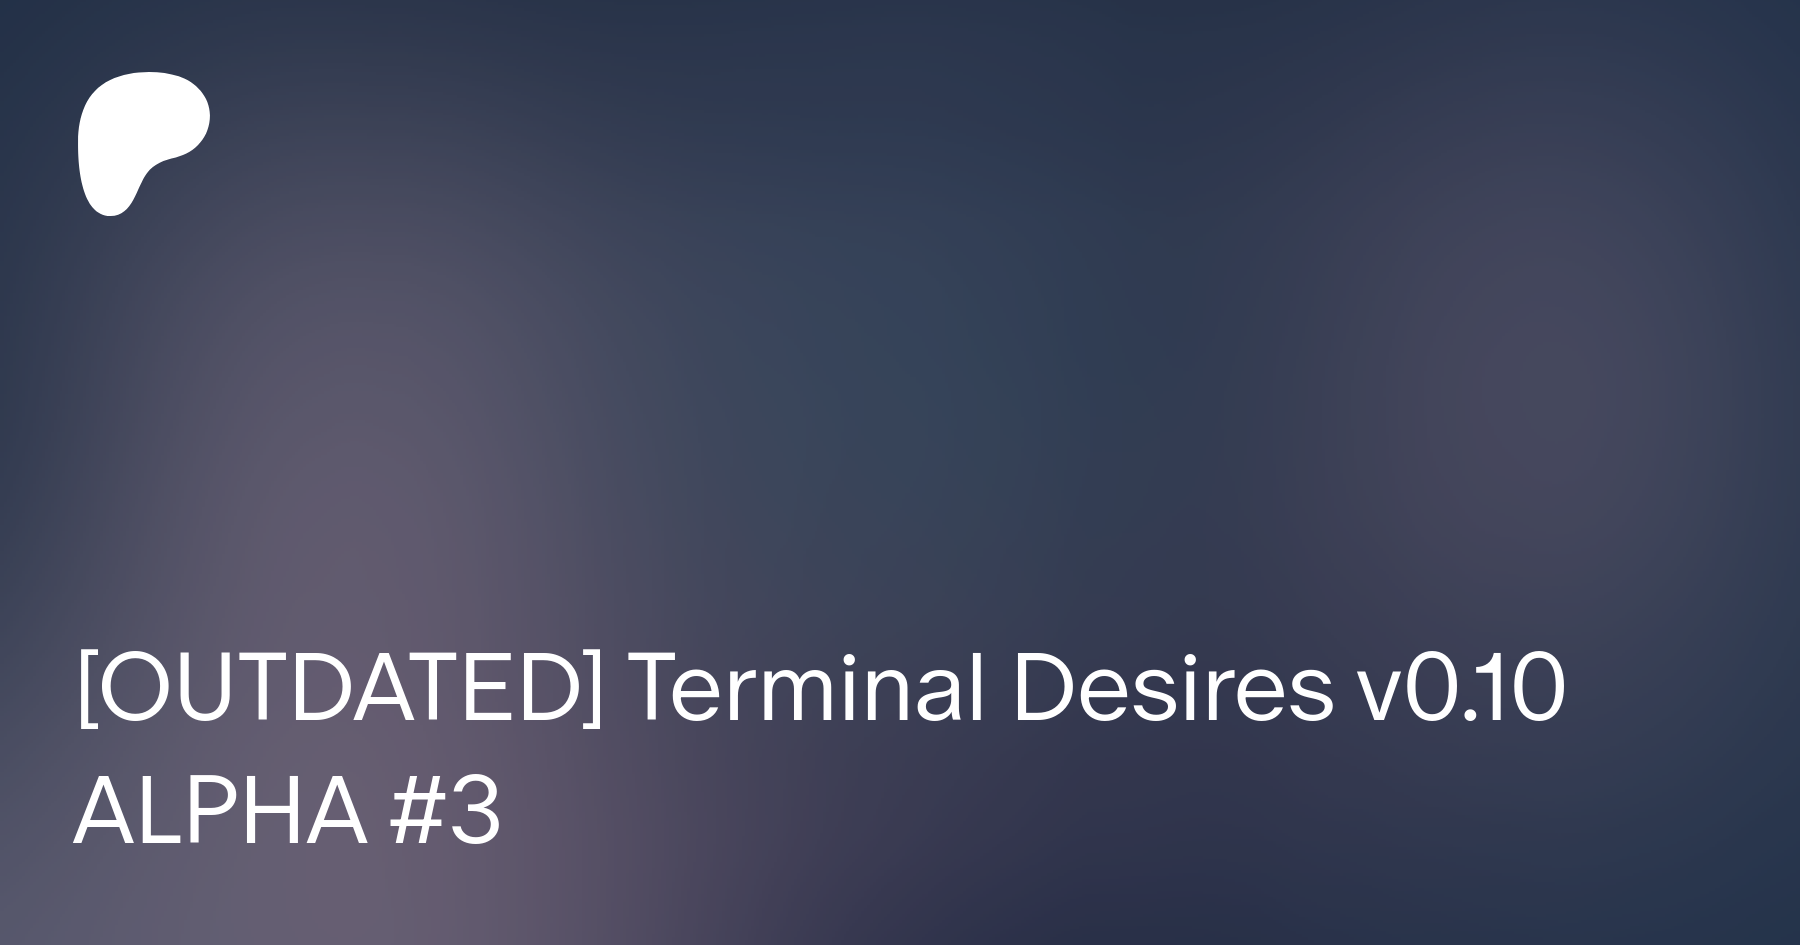 Terminal desire